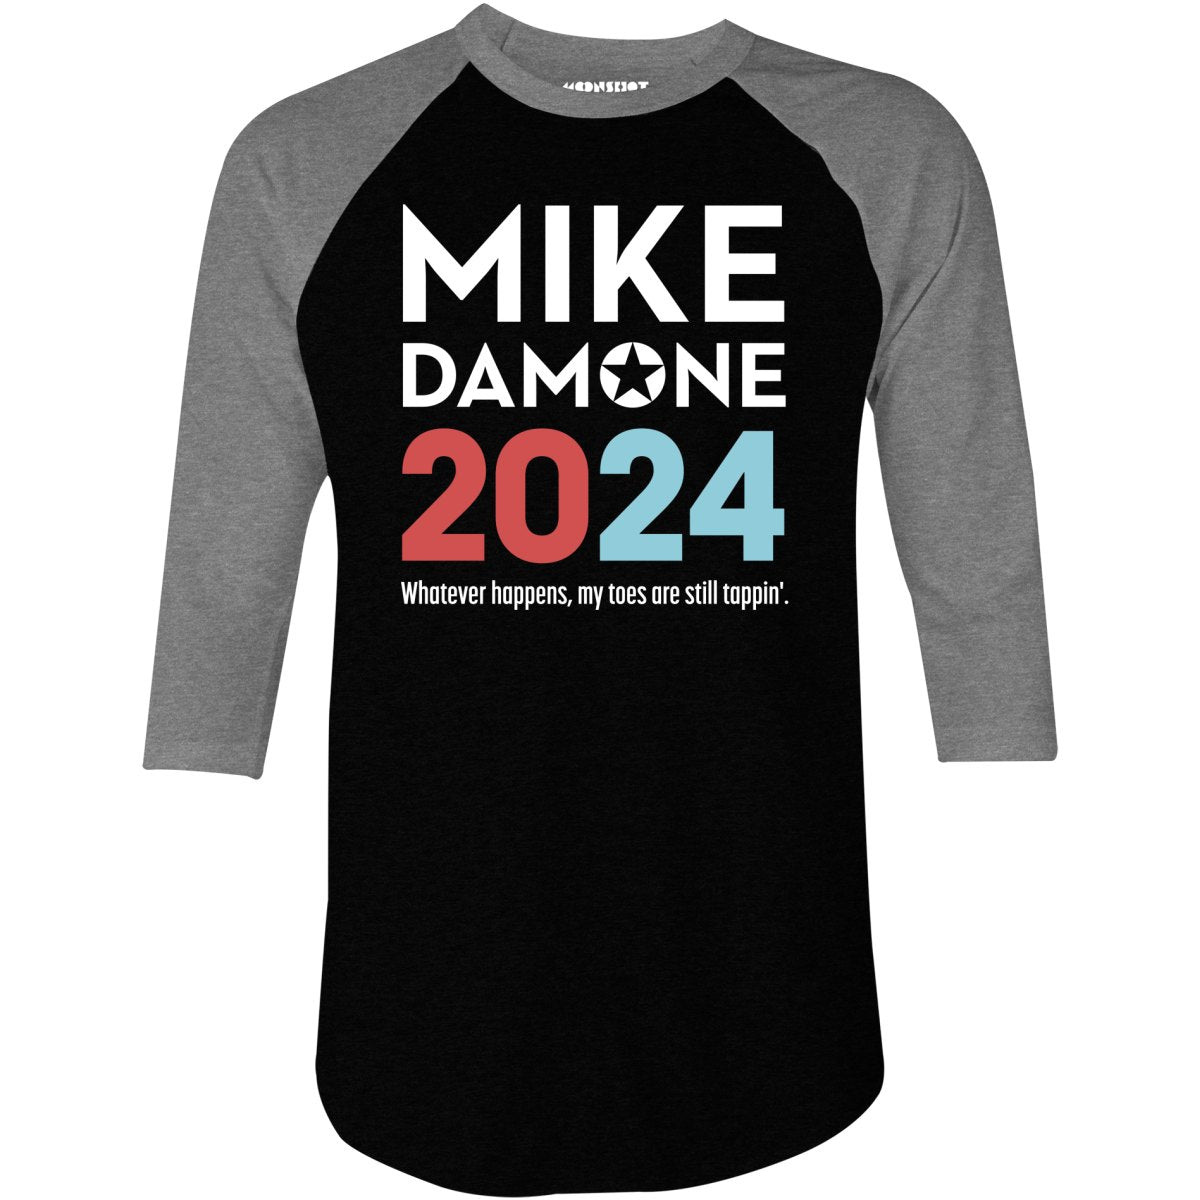 Mike Damone 2024 - 3/4 Sleeve Raglan T-Shirt